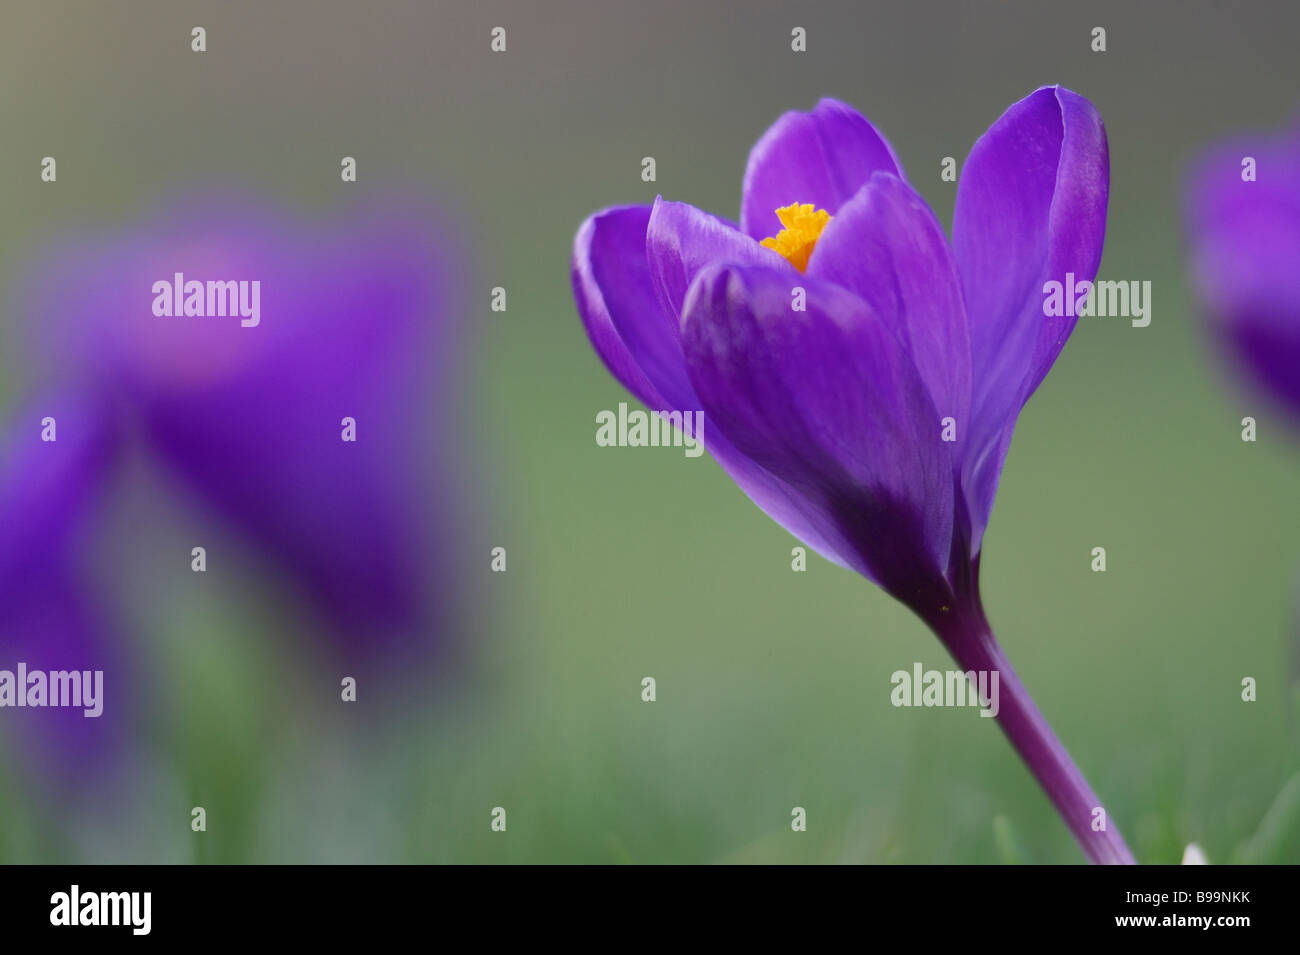 Crocus (Crocus pulchellus) flowering on lawn Stock Photo